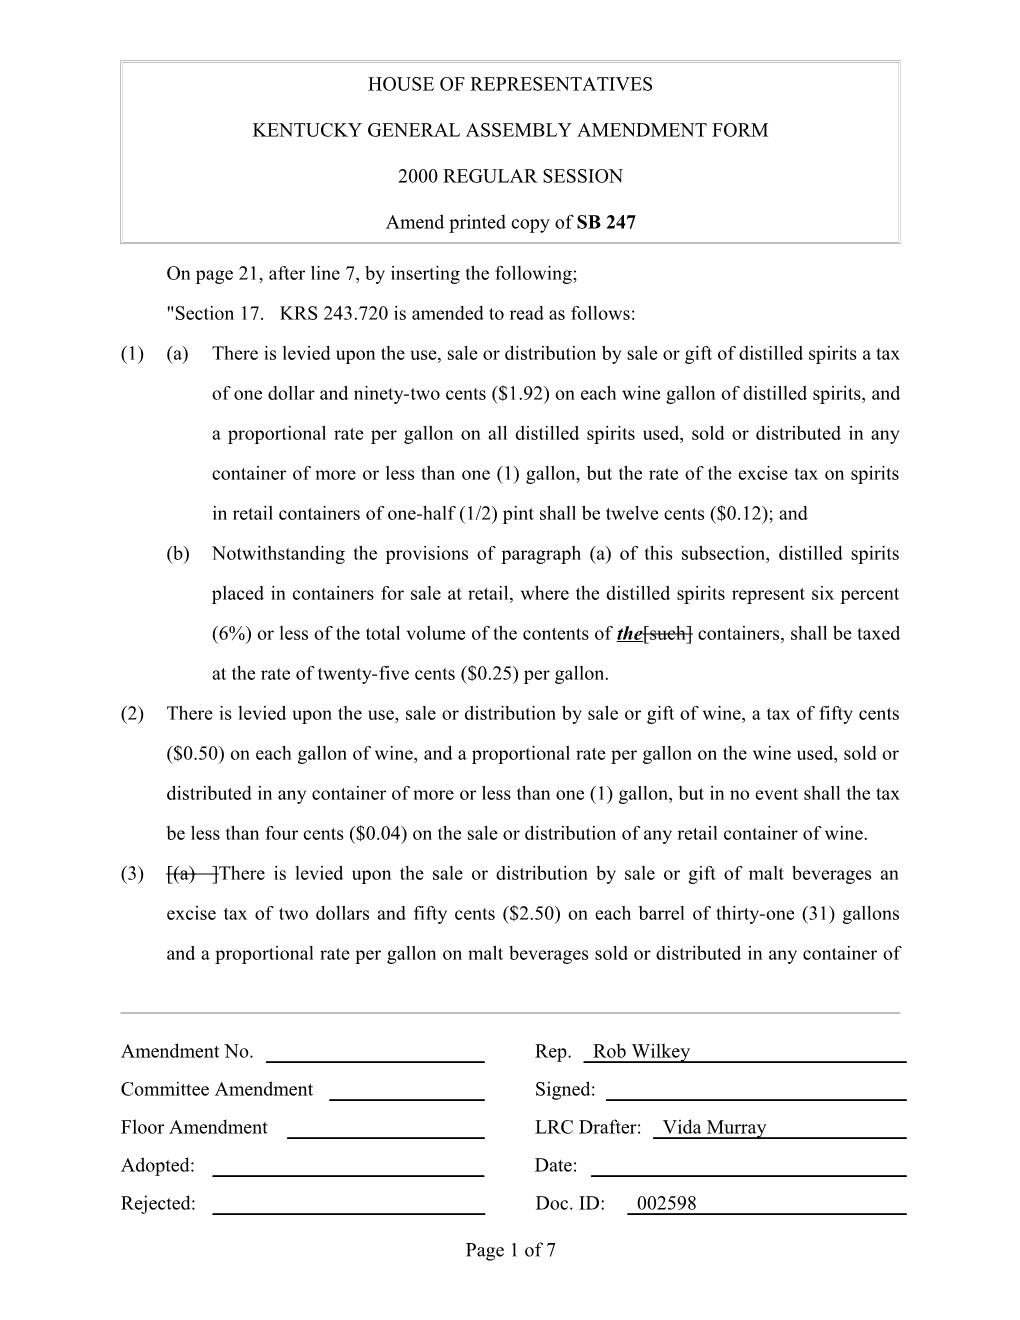 Kentucky General Assembly Amendment Form s13